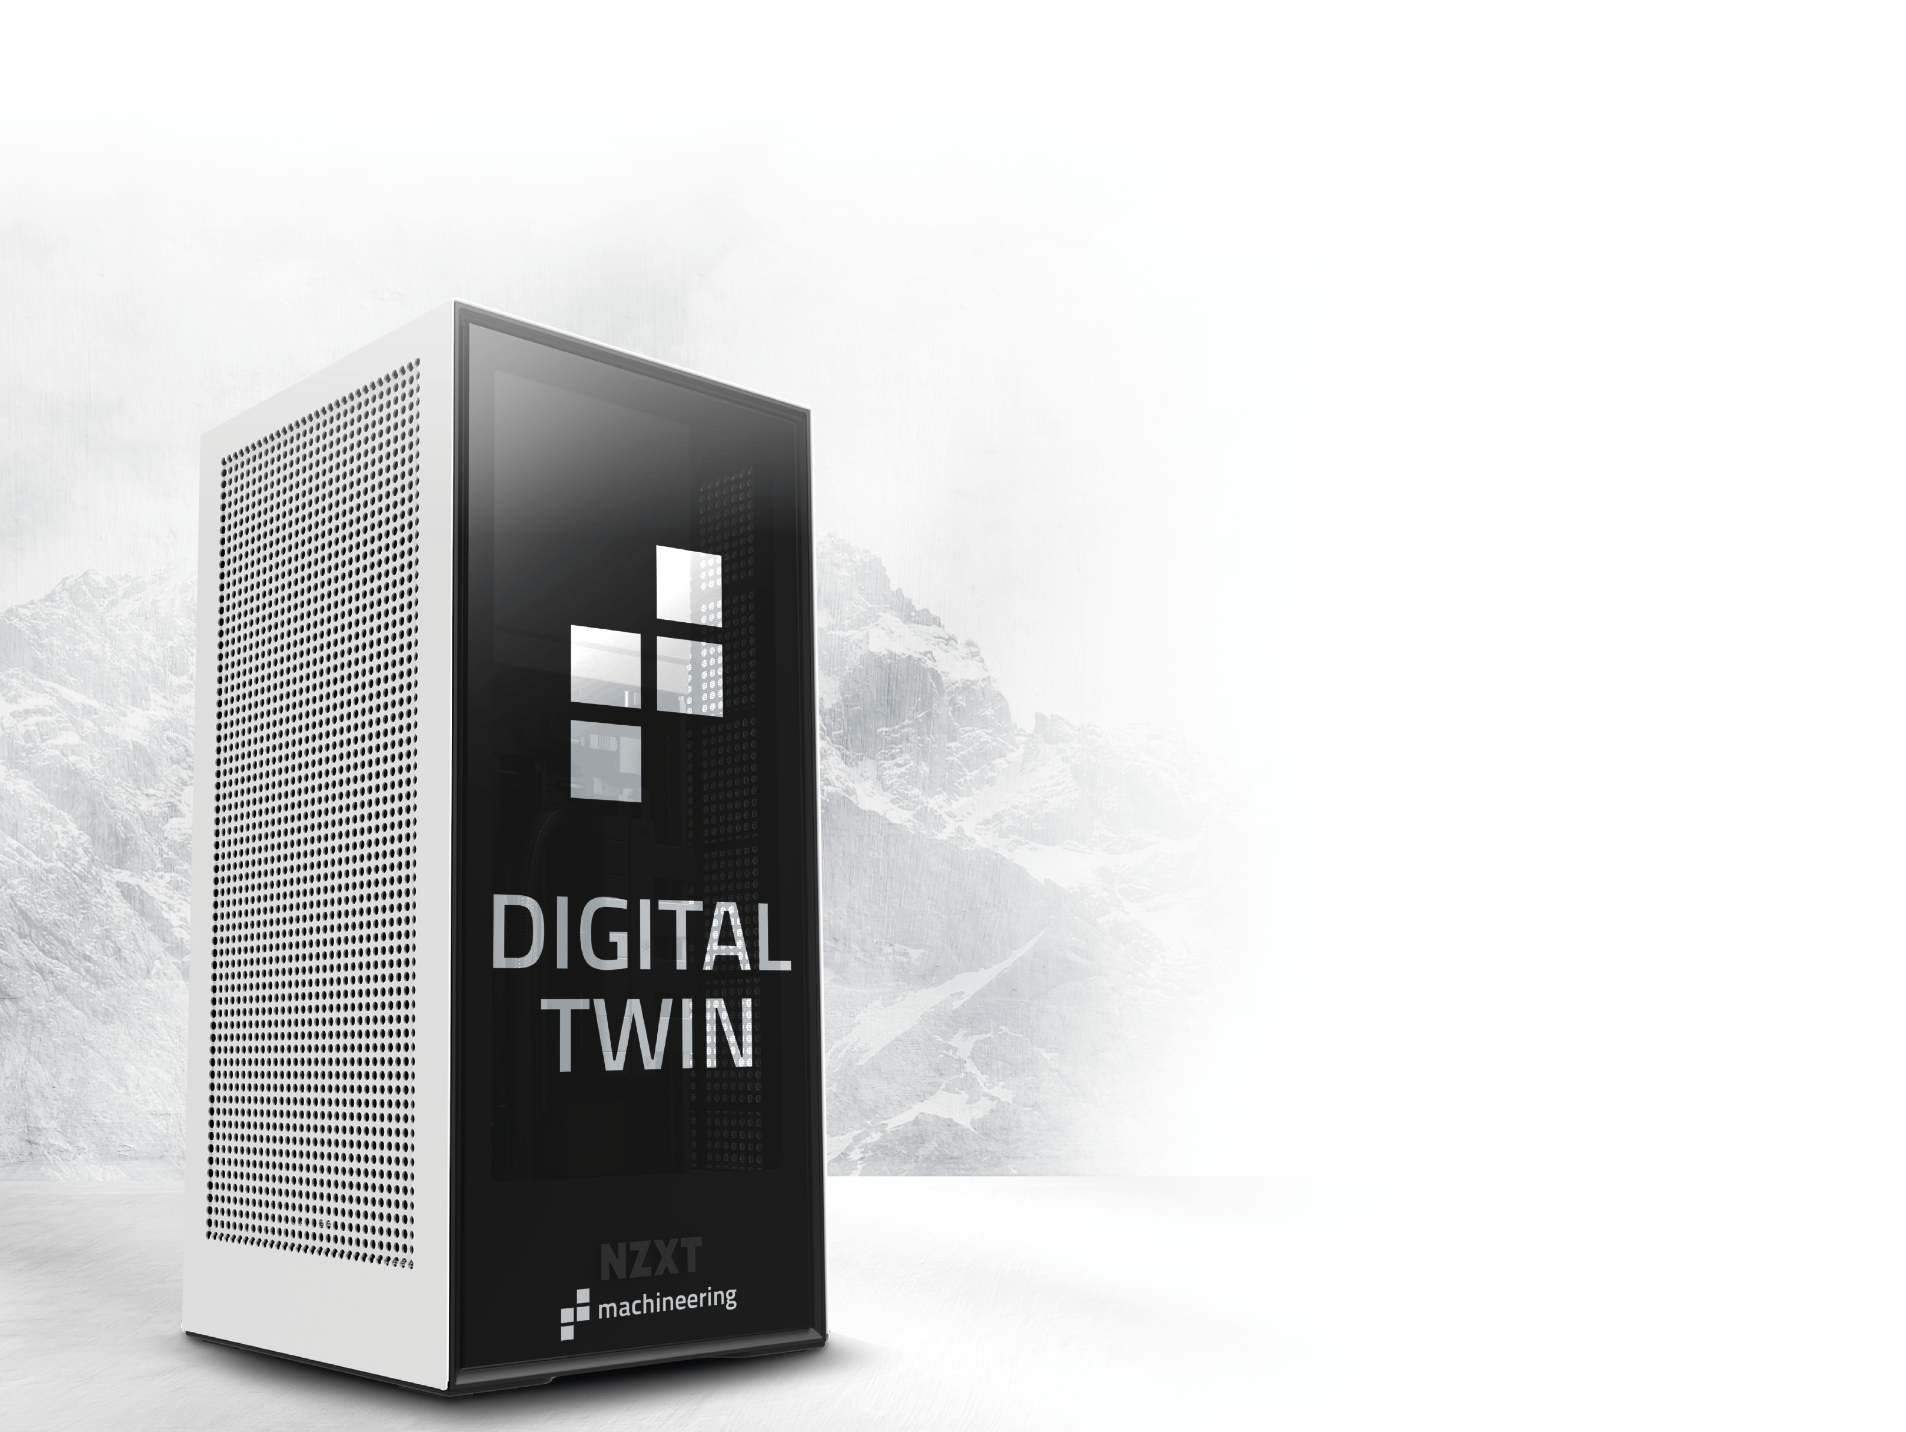 machineering digital Twin